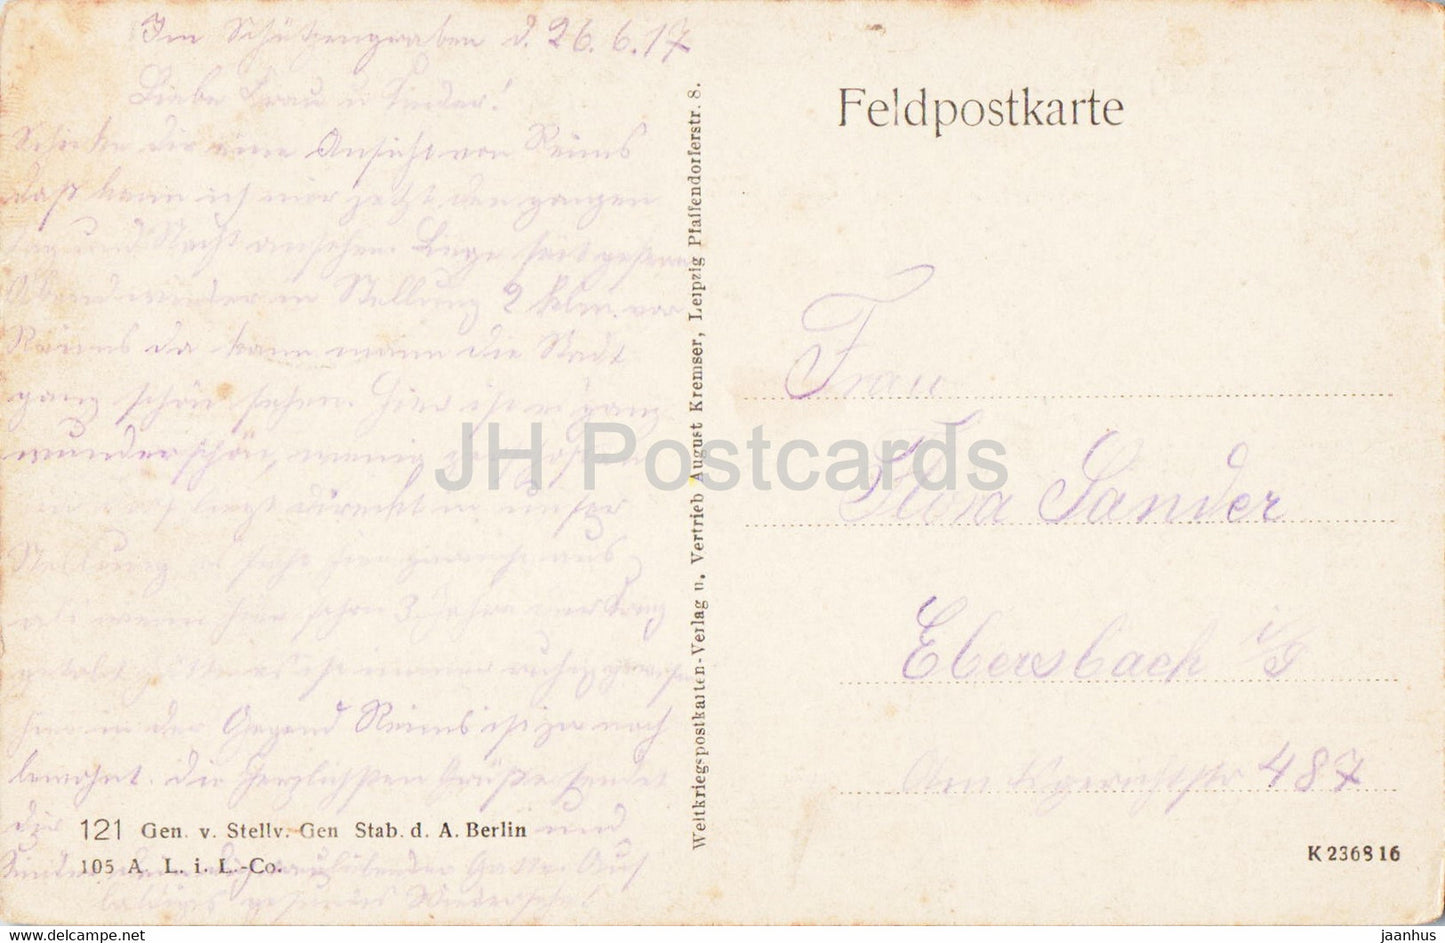 Reims - Frankreich - Feldpostkarte - 121 - carte postale ancienne - 1917 - France - utilisé